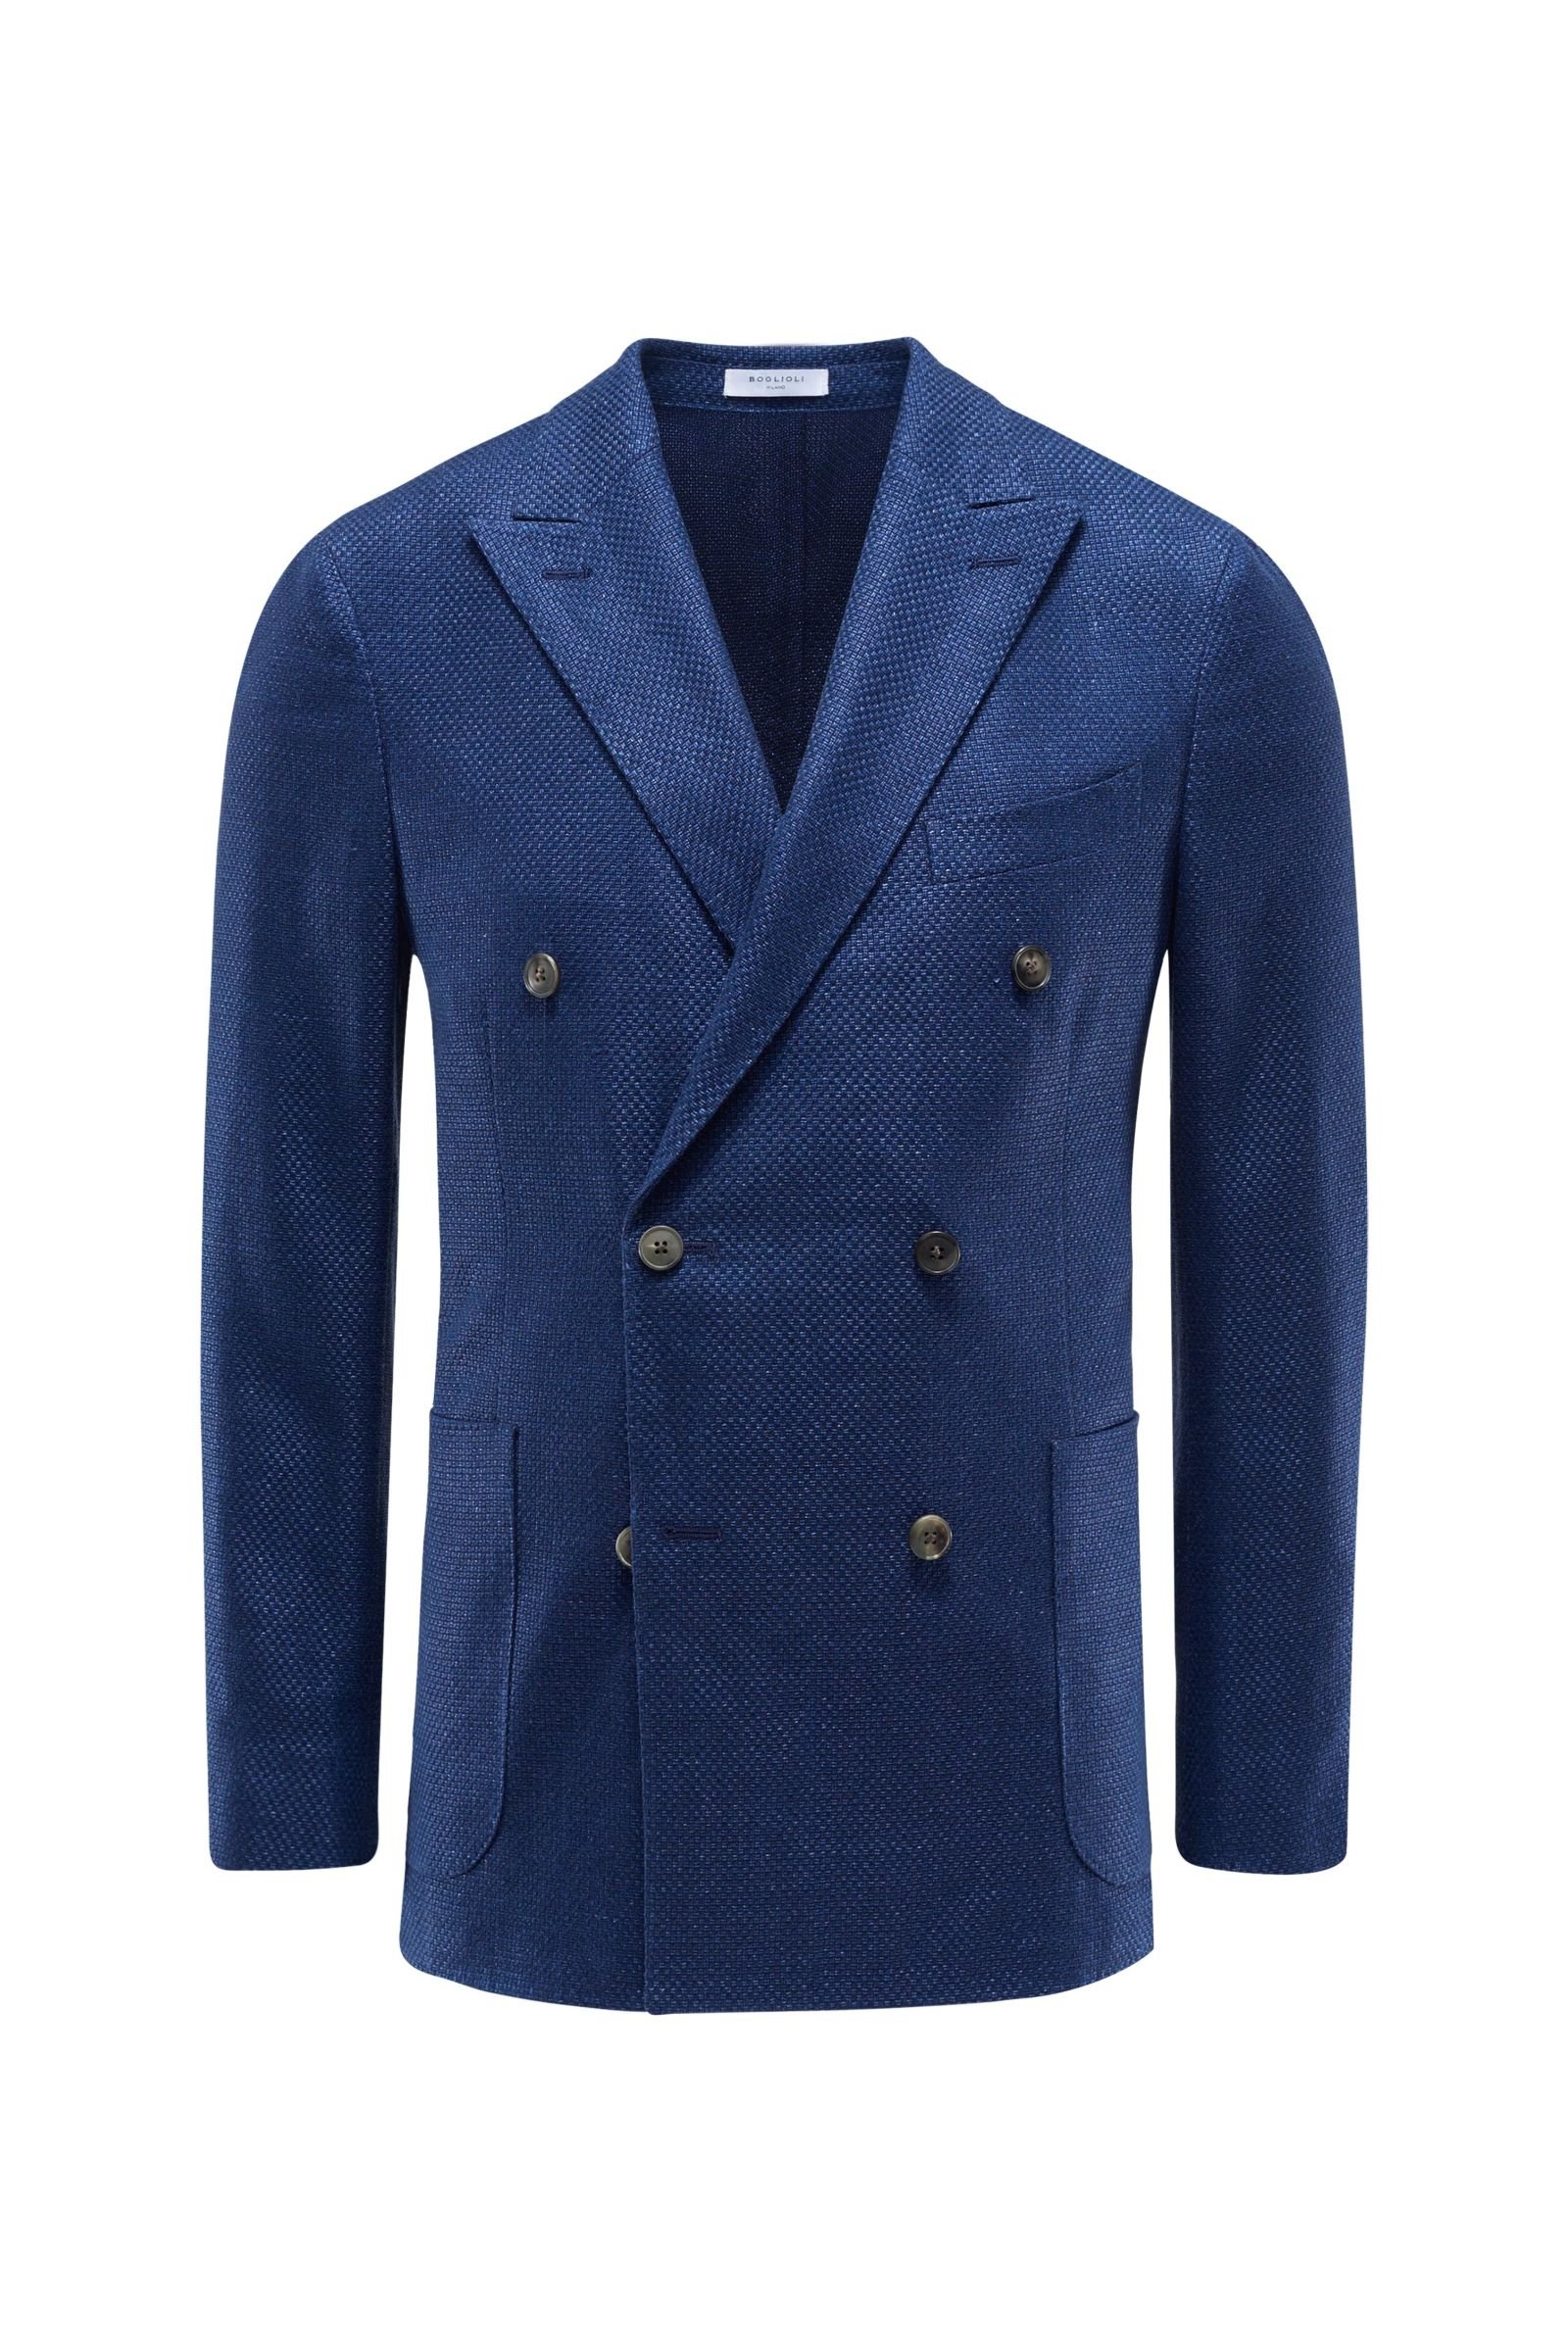 Smart-casual jacket blue